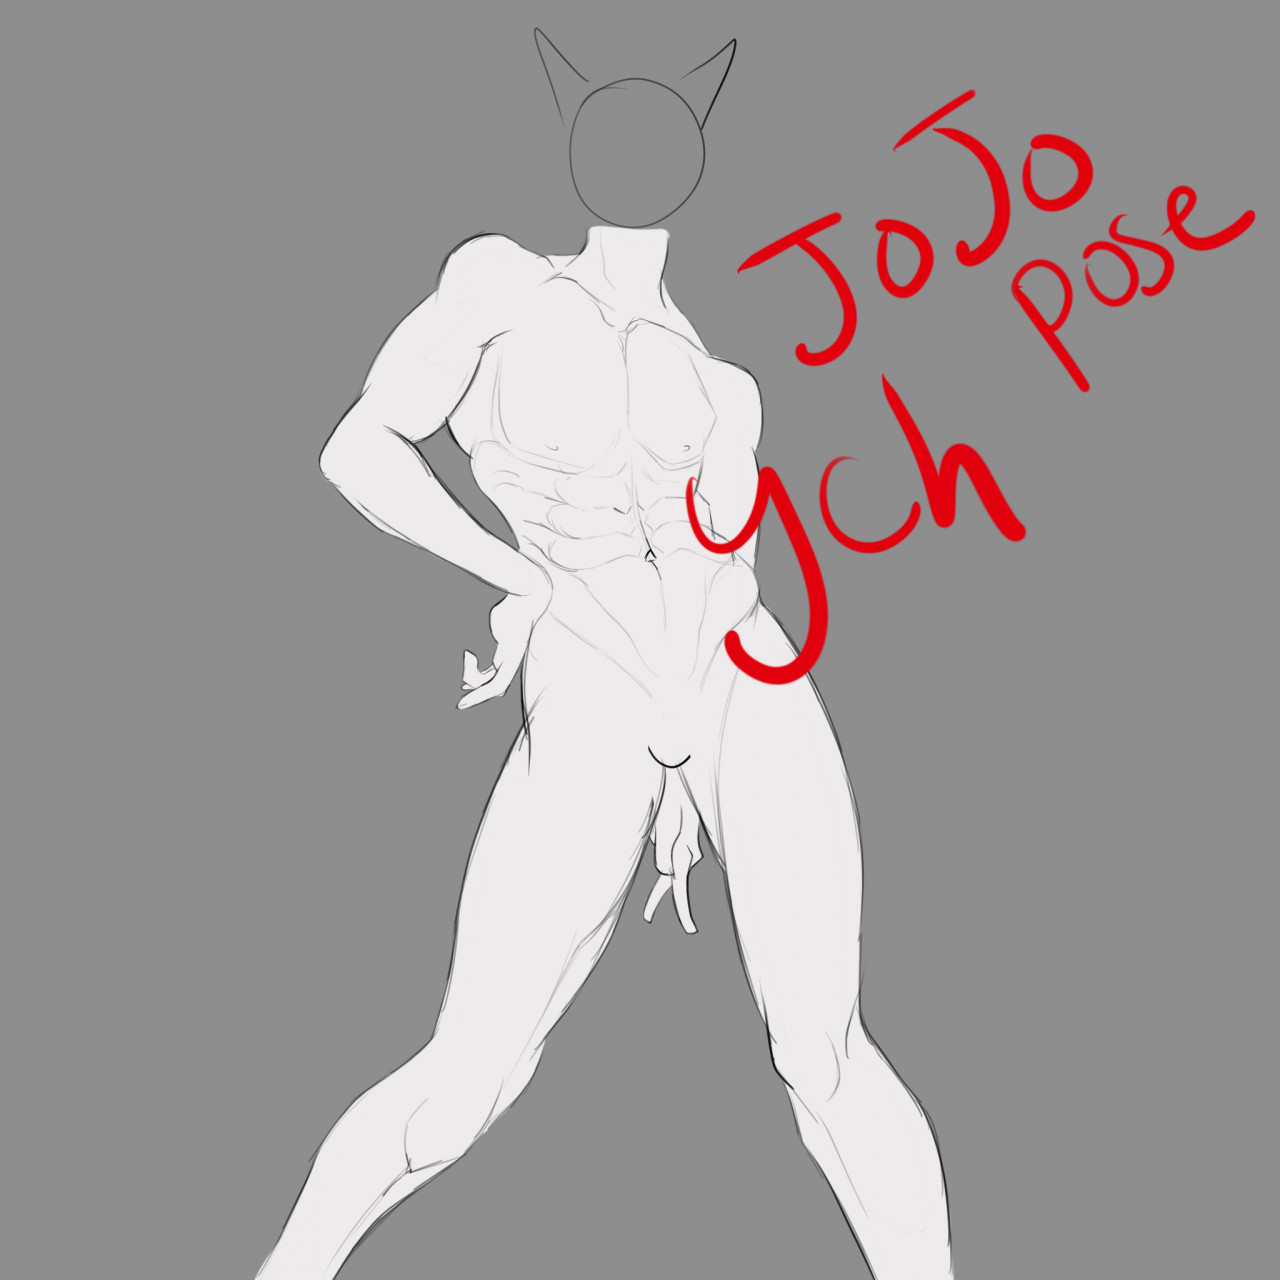 Comm: JoJo pose! by Justaboyfromtheforest -- Fur Affinity [dot] net